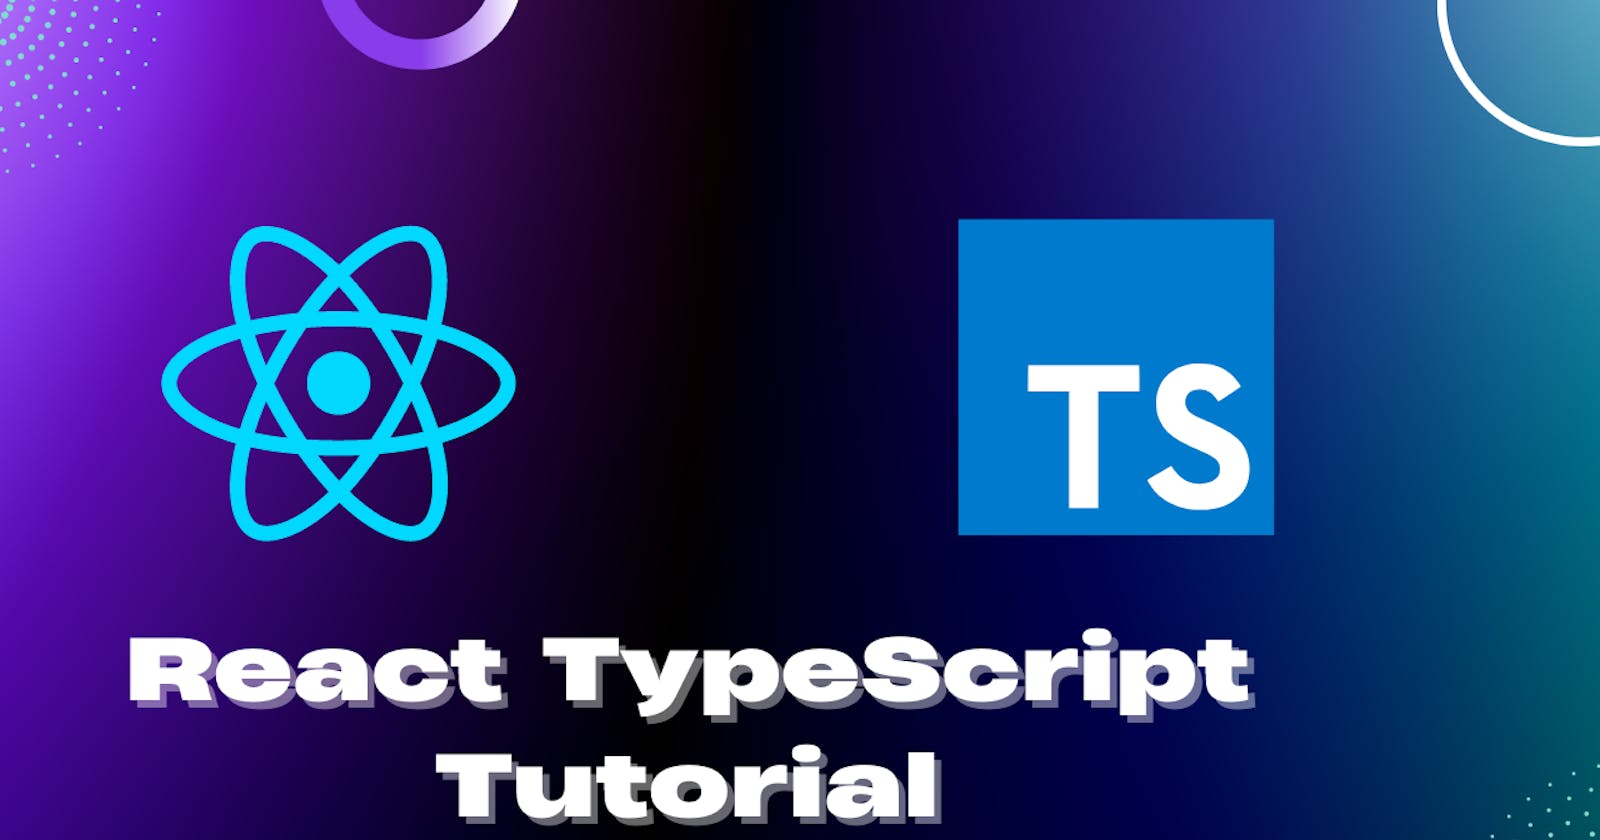 TypeScript with React Tutorial